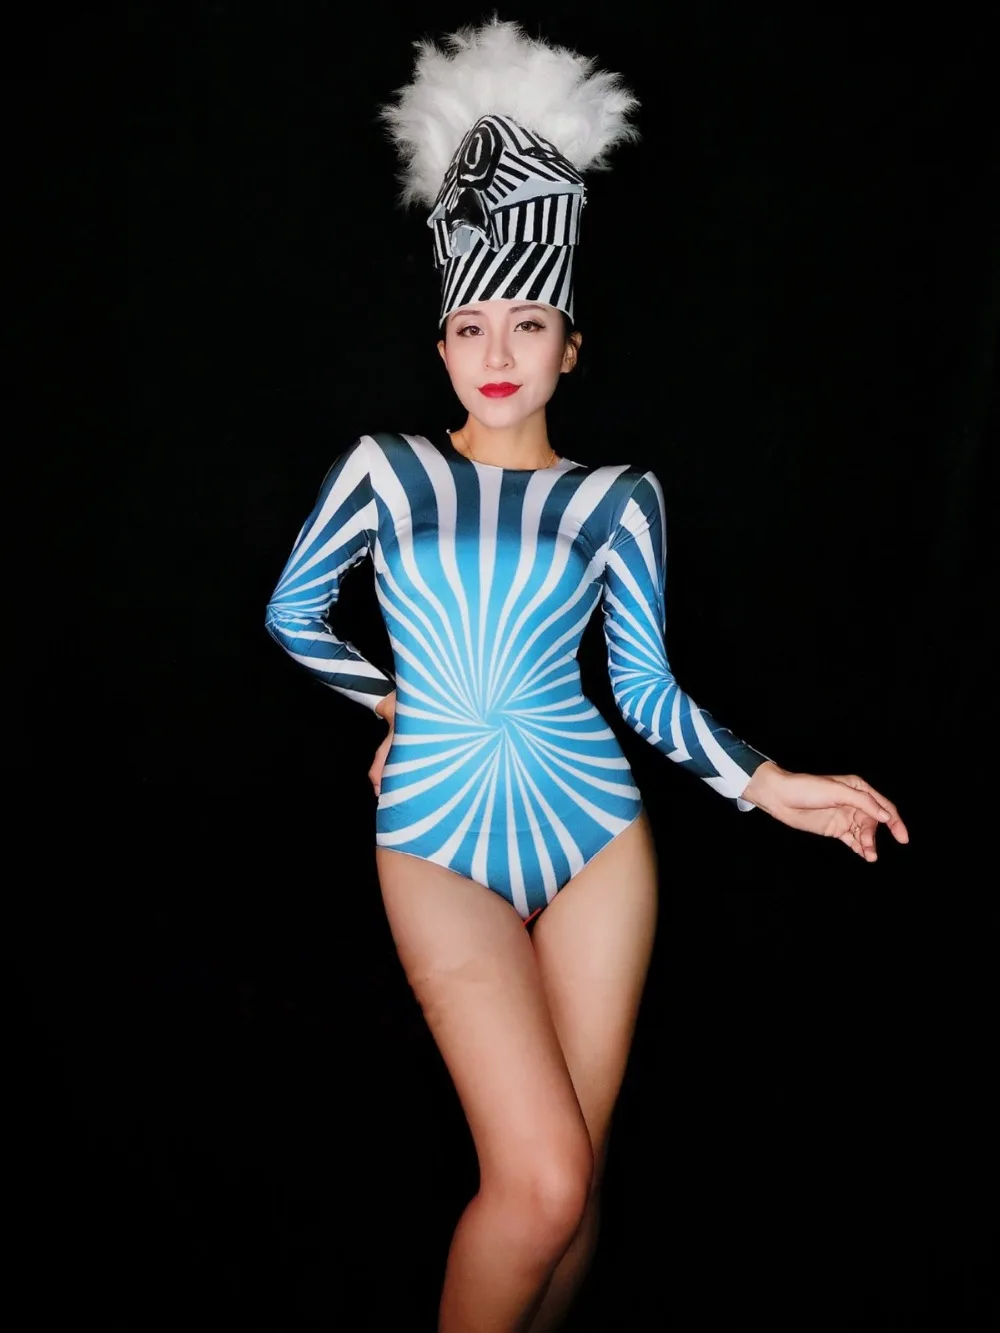 https://ae01.alicdn.com/kf/HTB1_.PdXynrK1RjSsziq6xptpXa9/Nightclub-Female-Bodysuit-Blue-Printed-Stretch-Leotard-Sexy-Bar-DJ-Singer-Stage-Costume-Dancer-DS-Performance.jpg